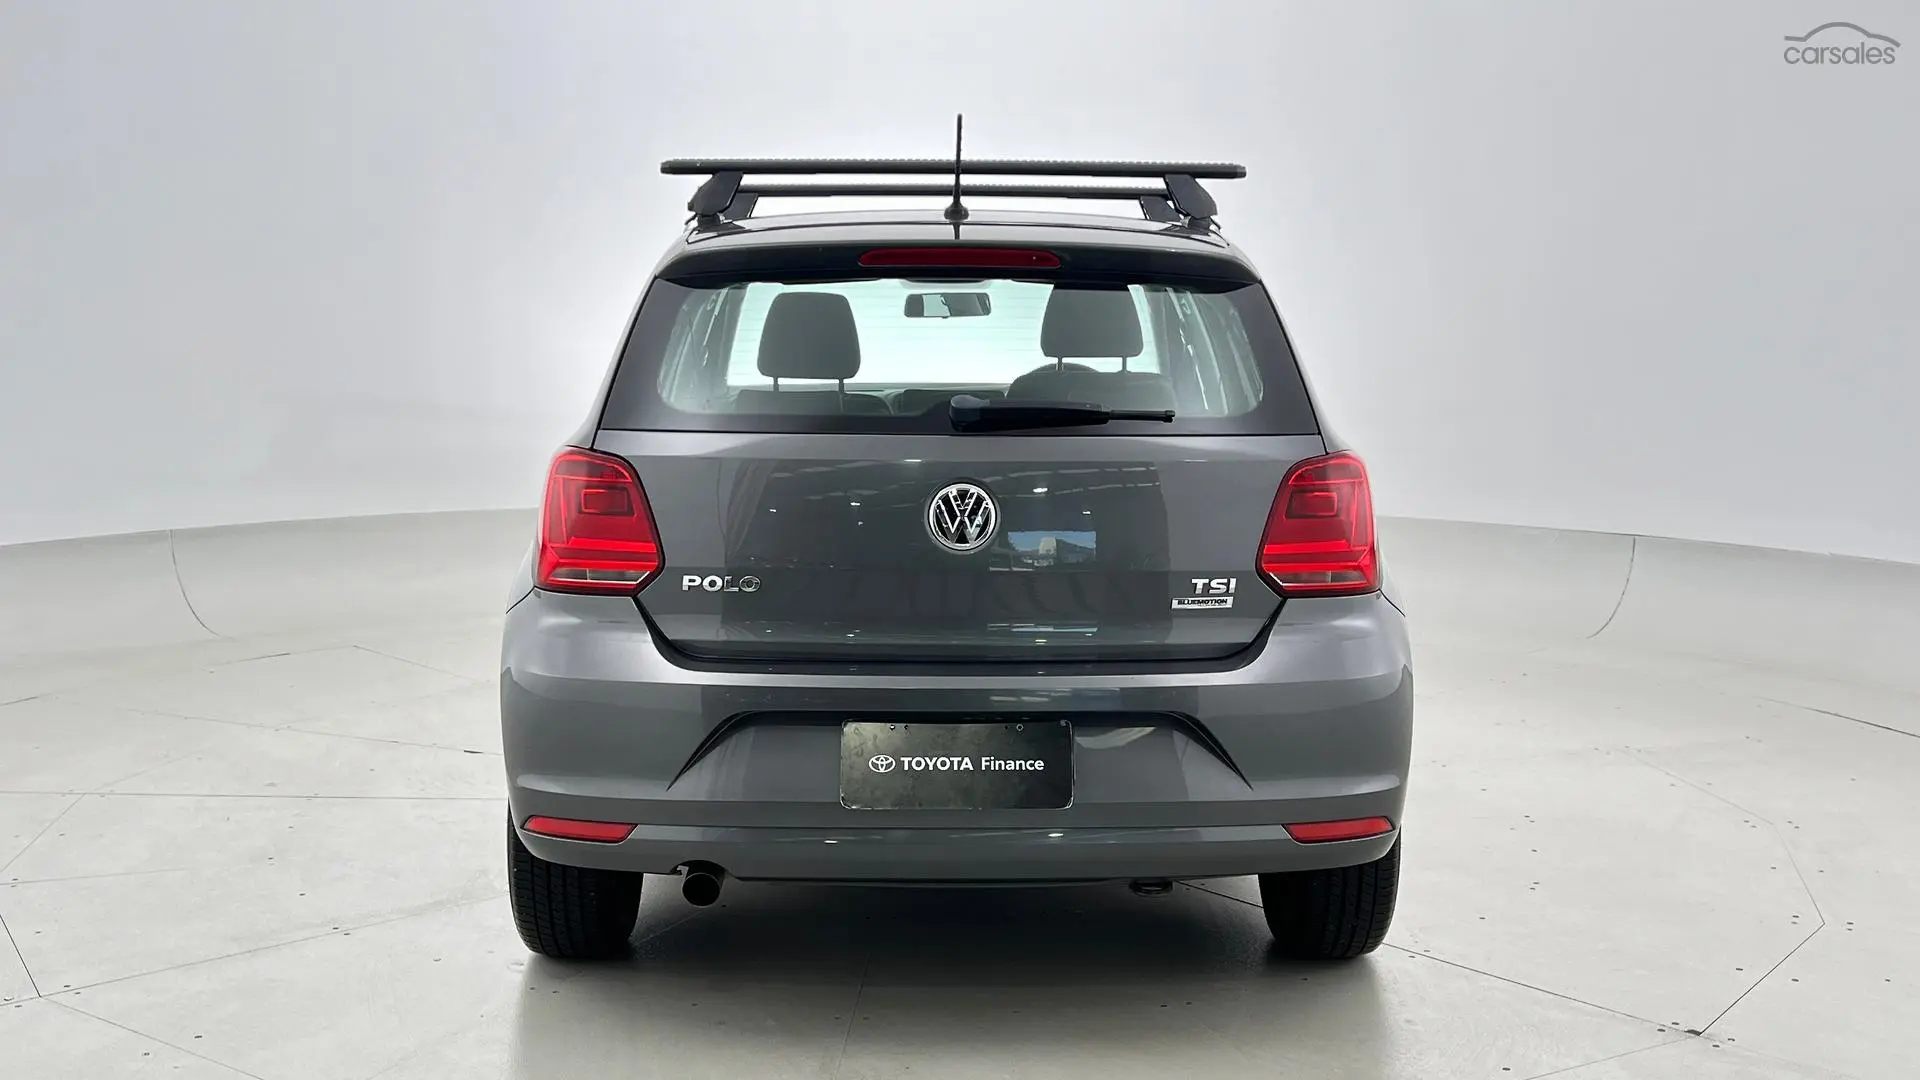 2015 Volkswagen Polo Image 7